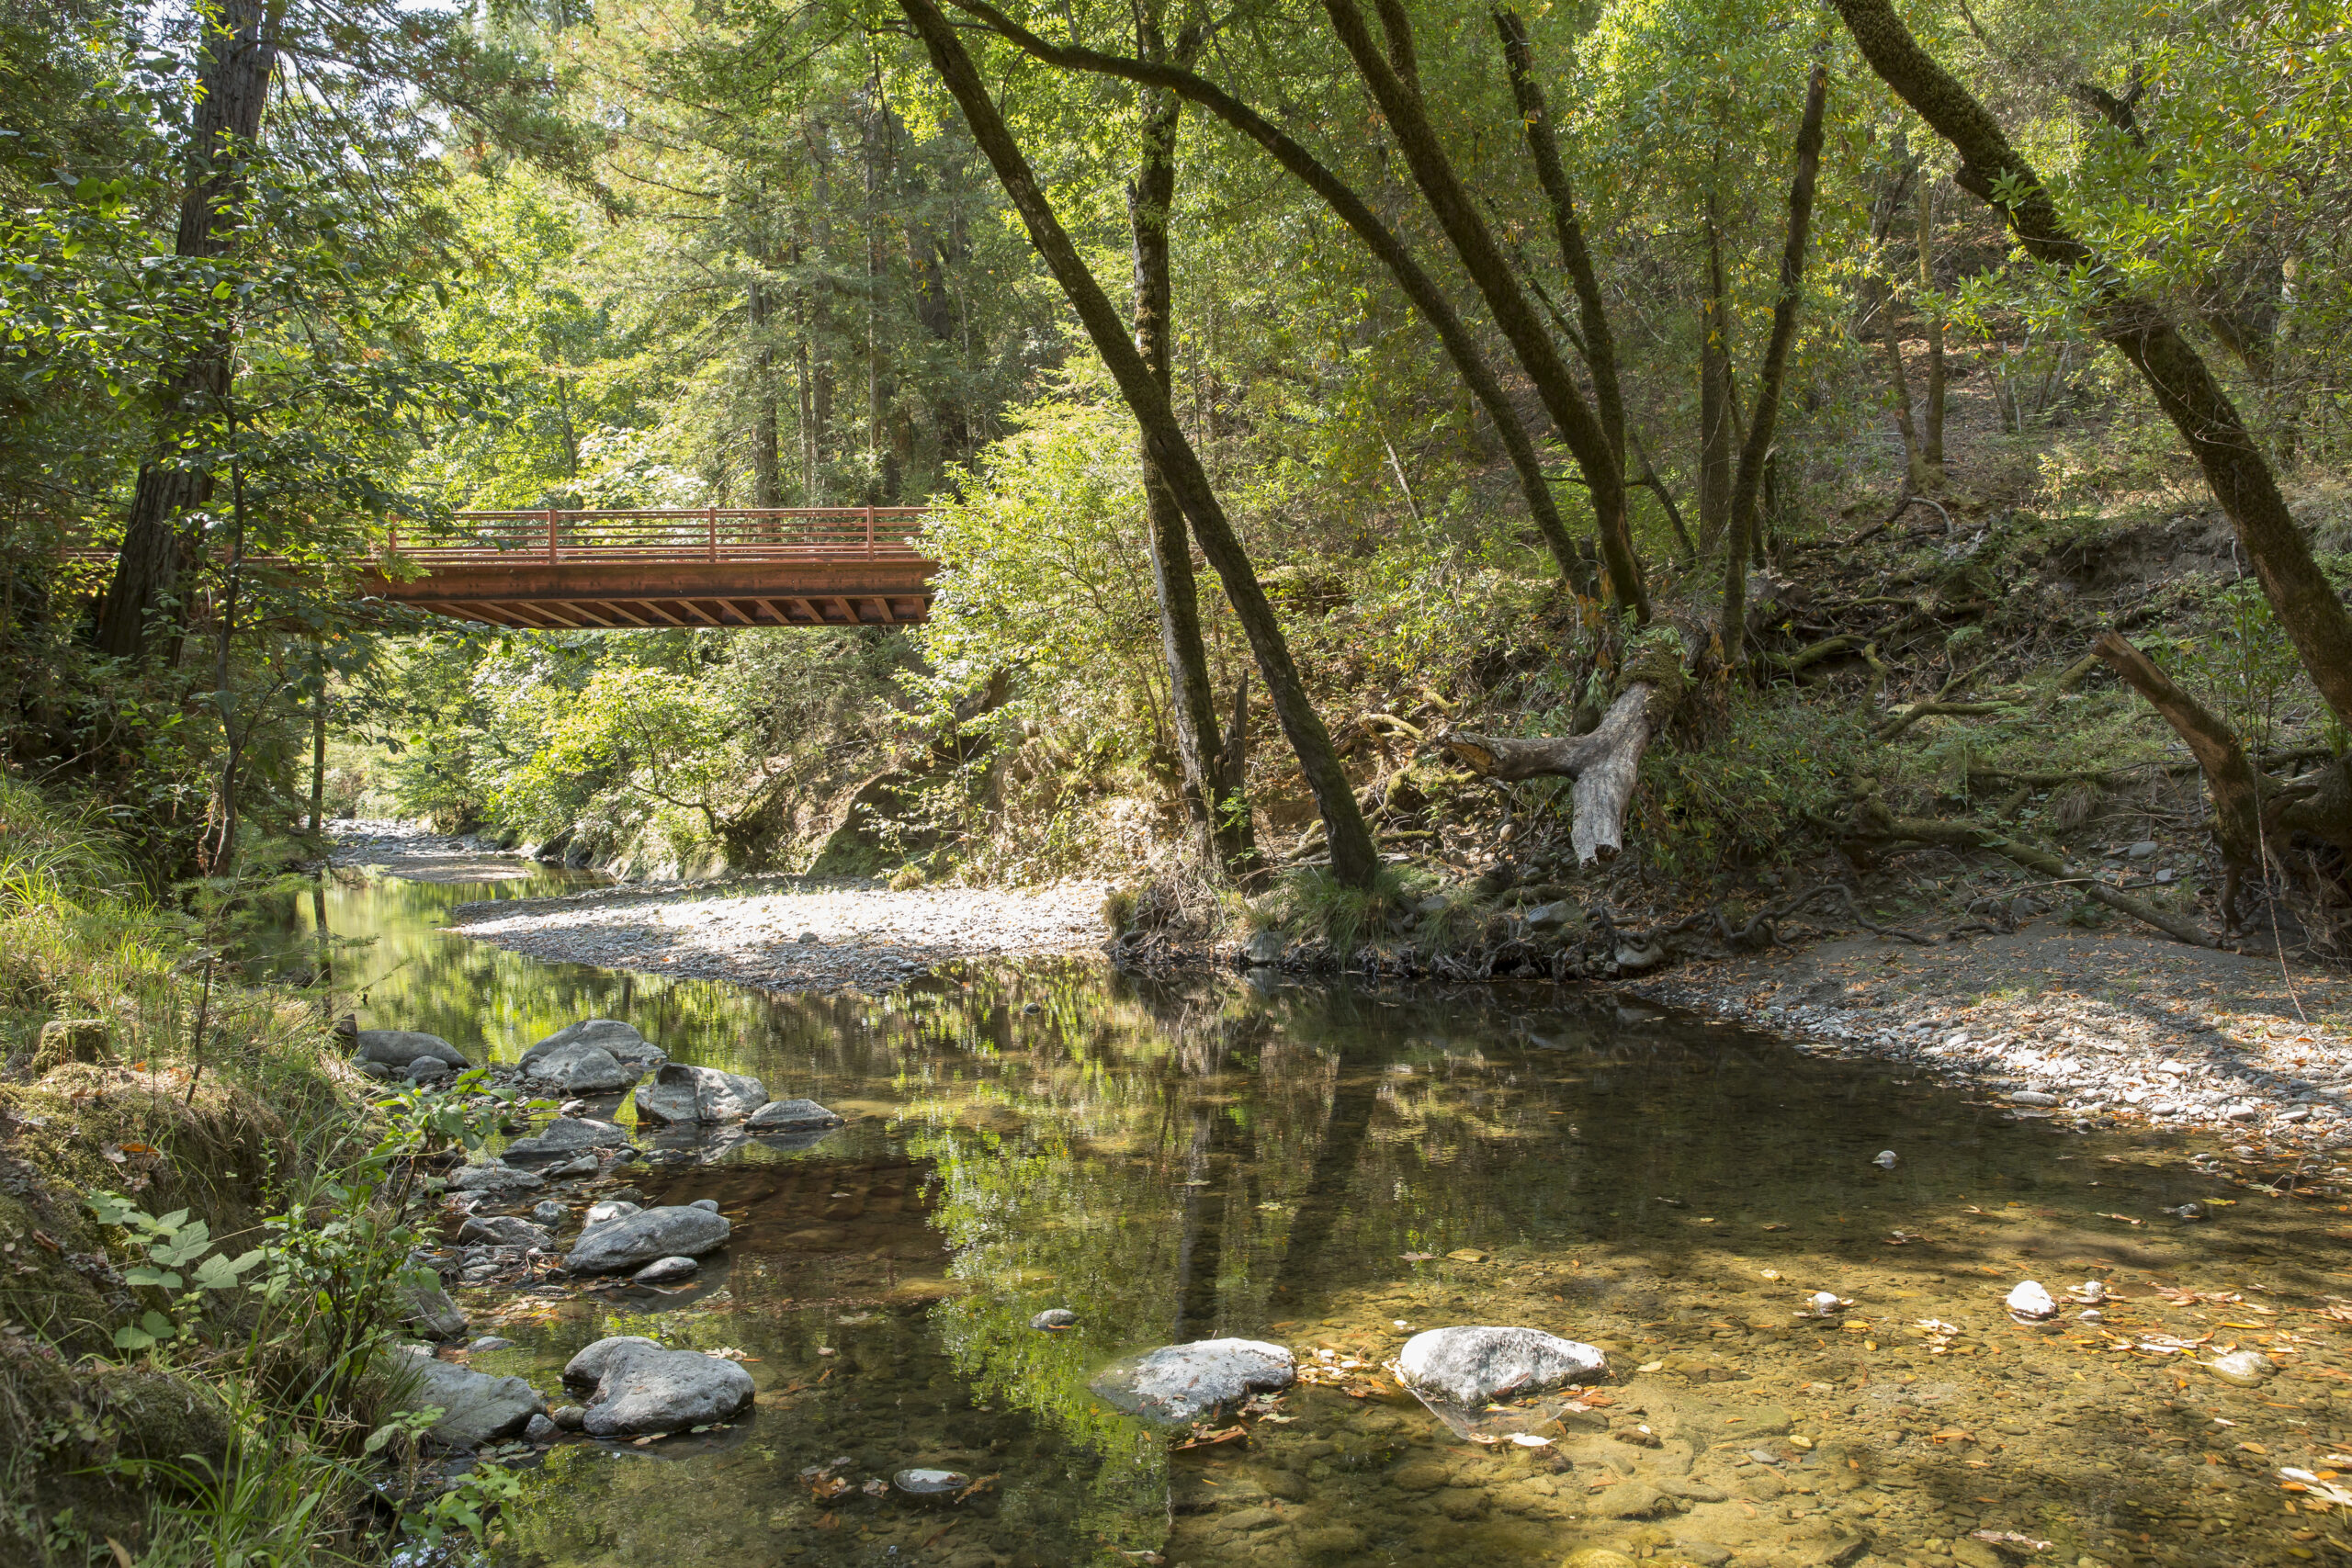 A footbridge runs across a heavily shaded section of Mark West Creek.